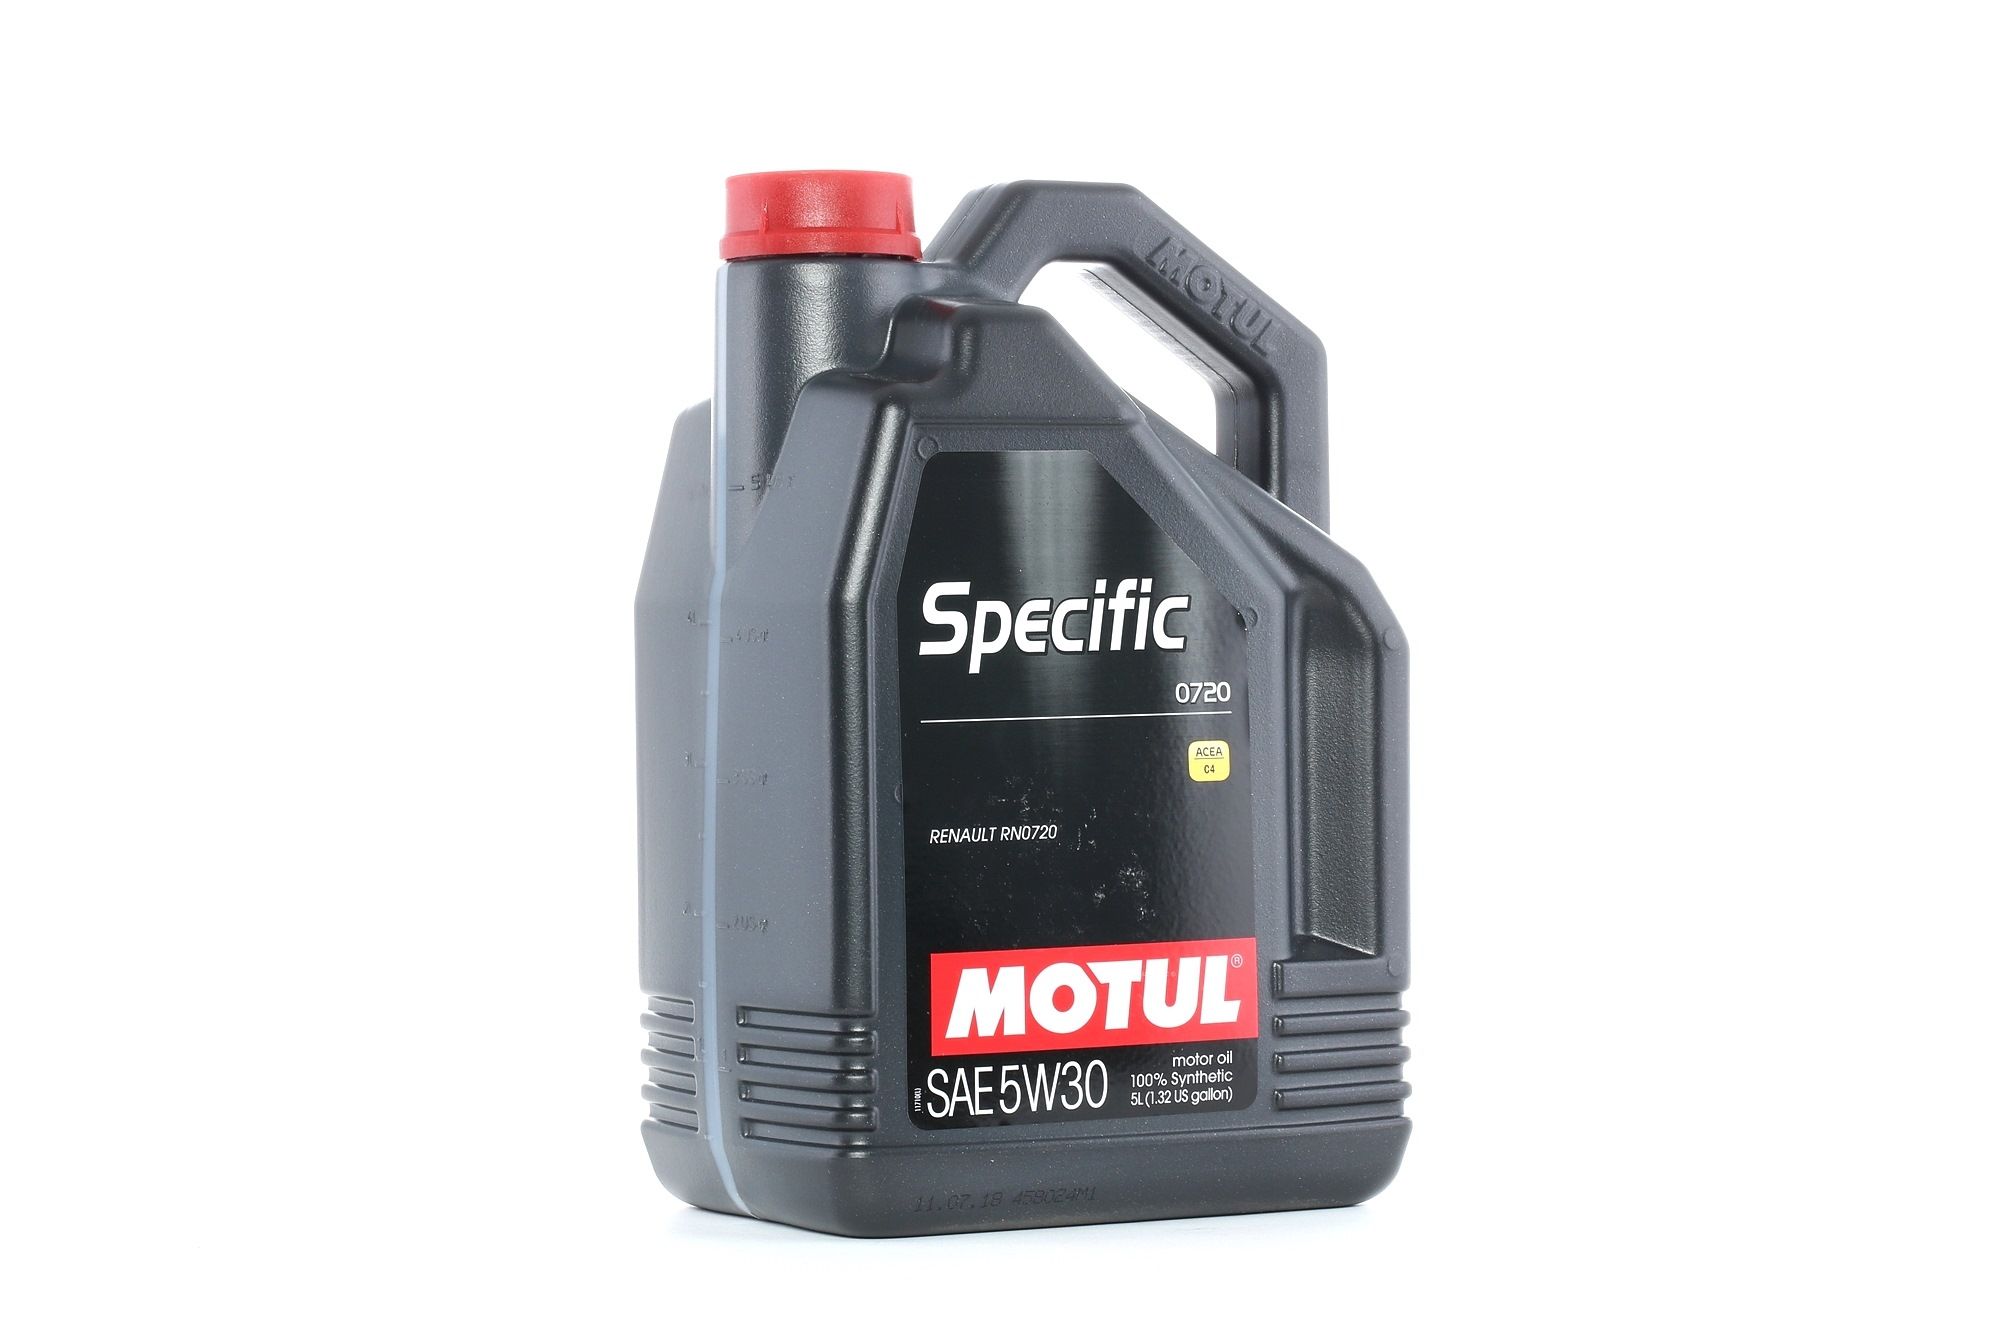 Kaufen Motorenöl MOTUL 102209 Specific, 0720 5W-30, 5l